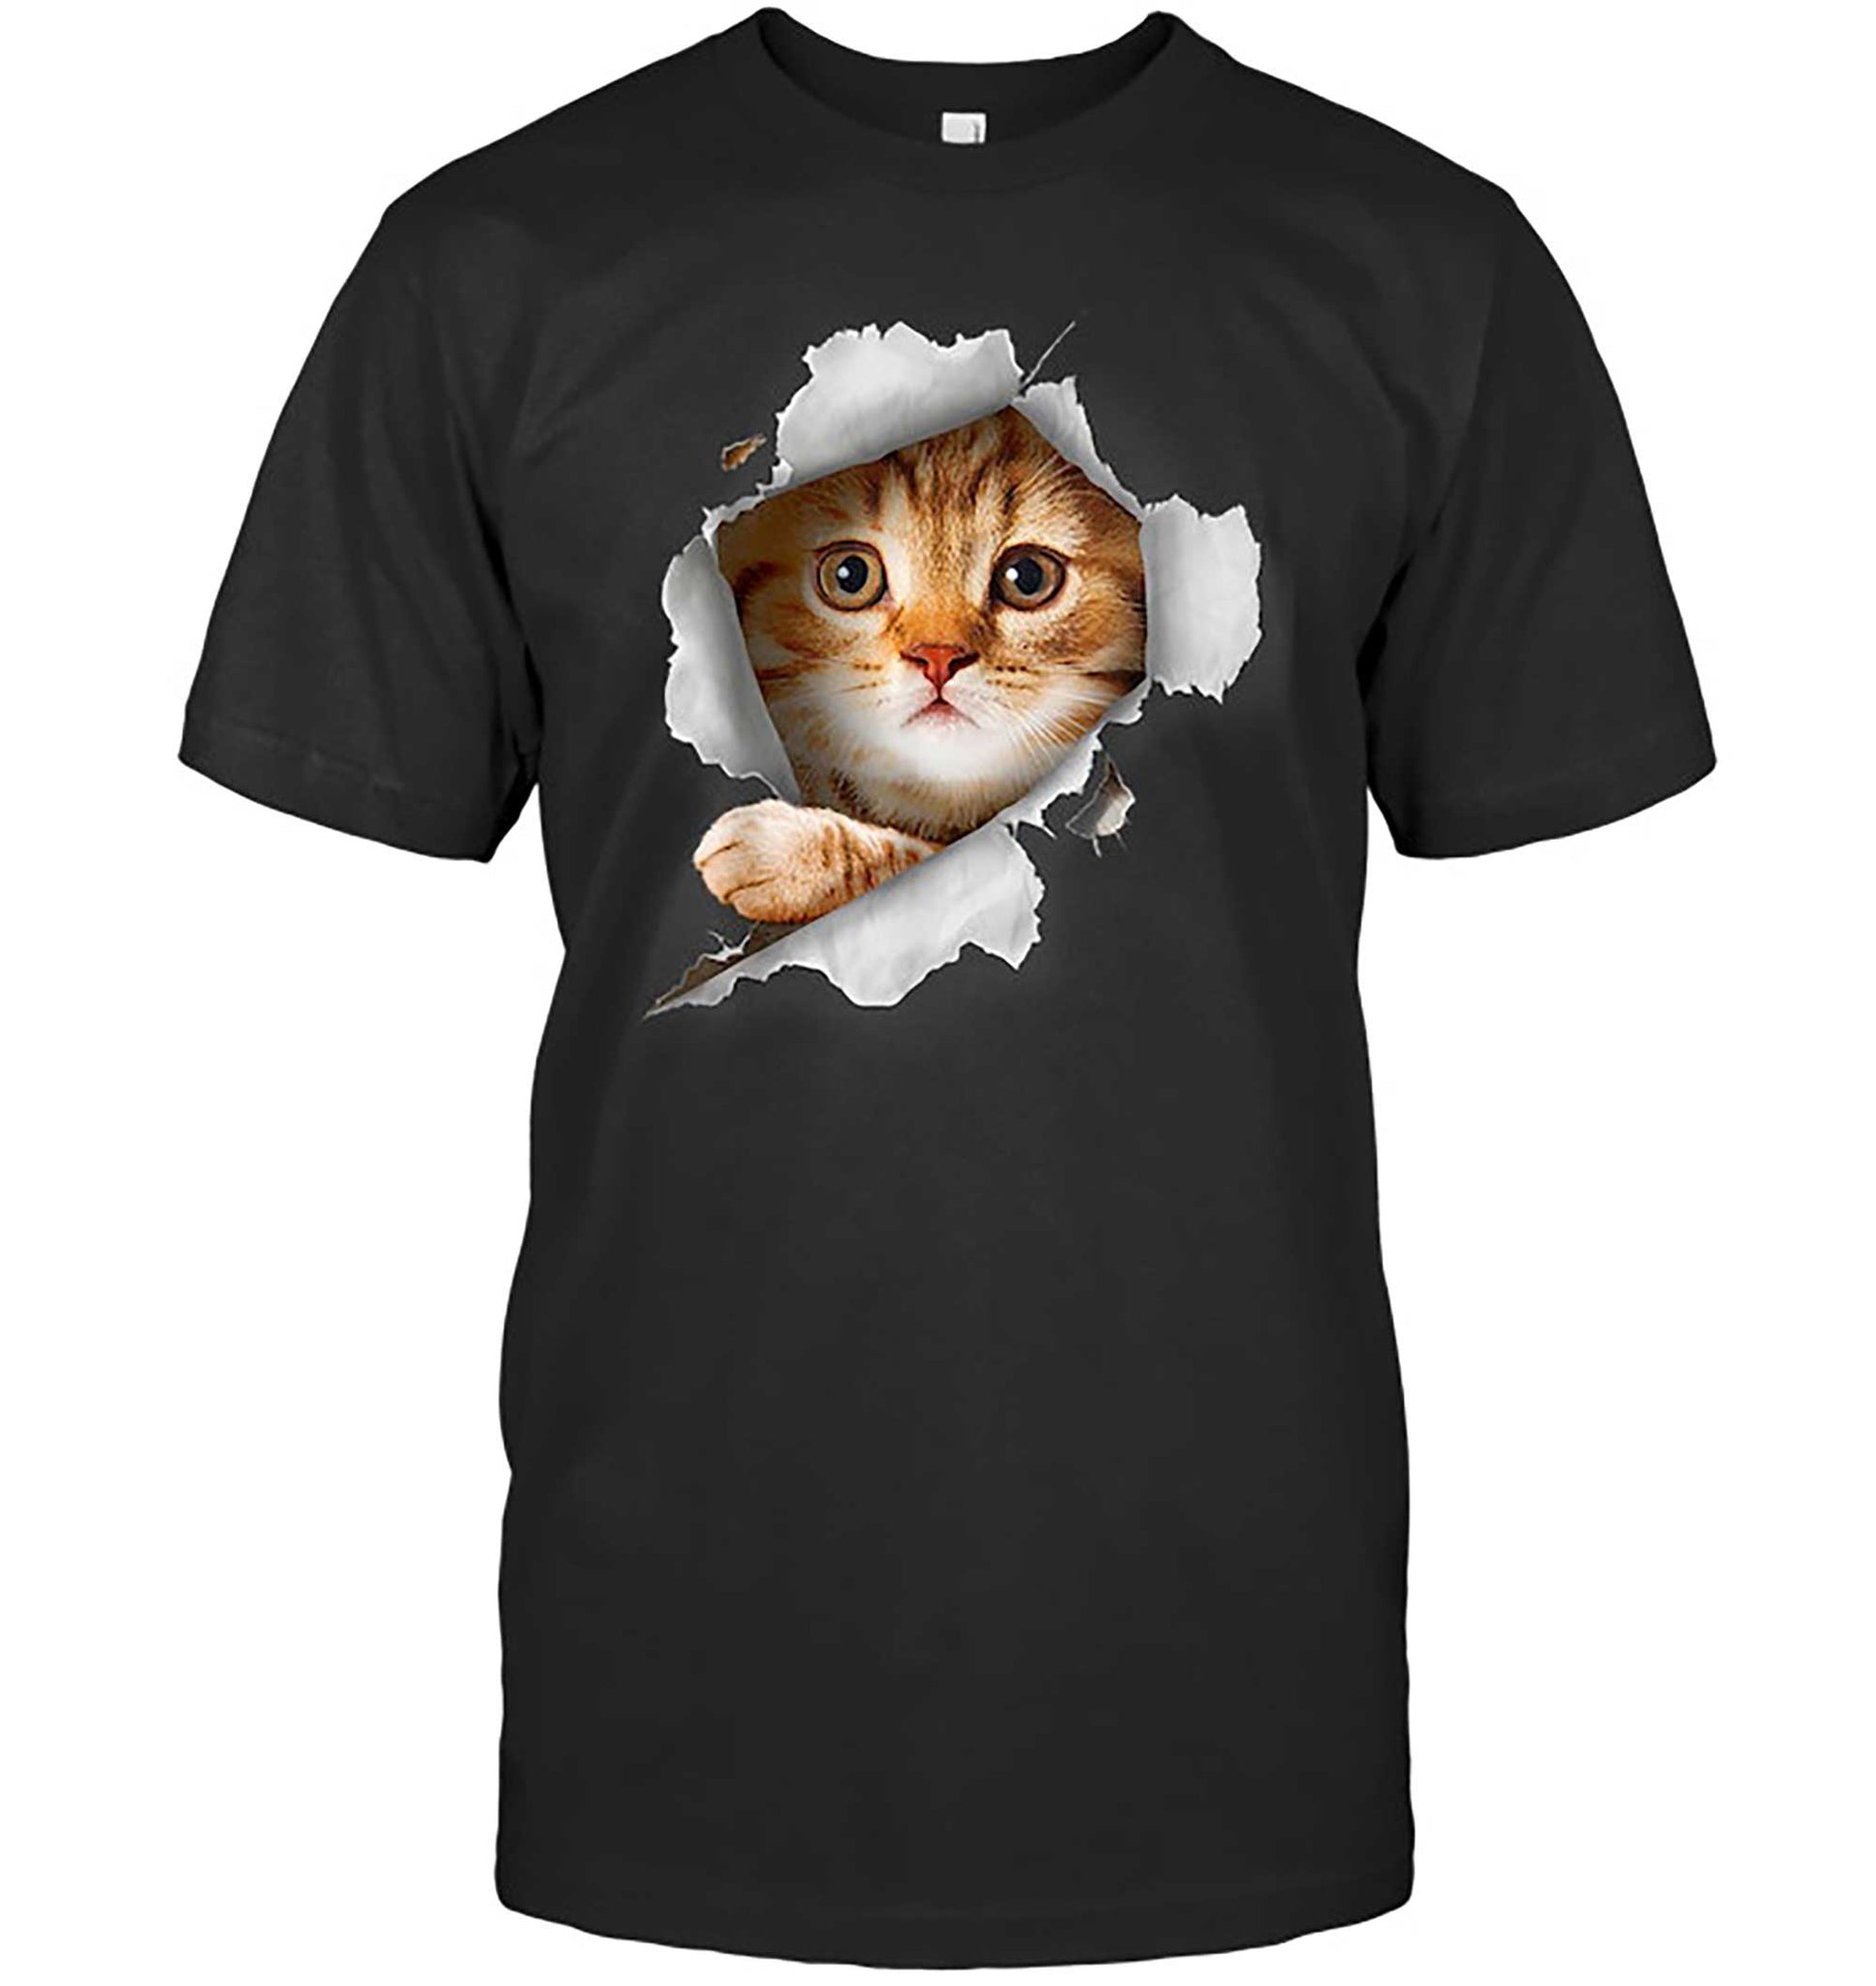 Skitongift-Cat-Shirt-Cat-Tshirt-Cat-Torn-Cloth-Shirt-Funny-Shirts-Hoodie-Sweater-Short-Sleeve-Casual-Shirt